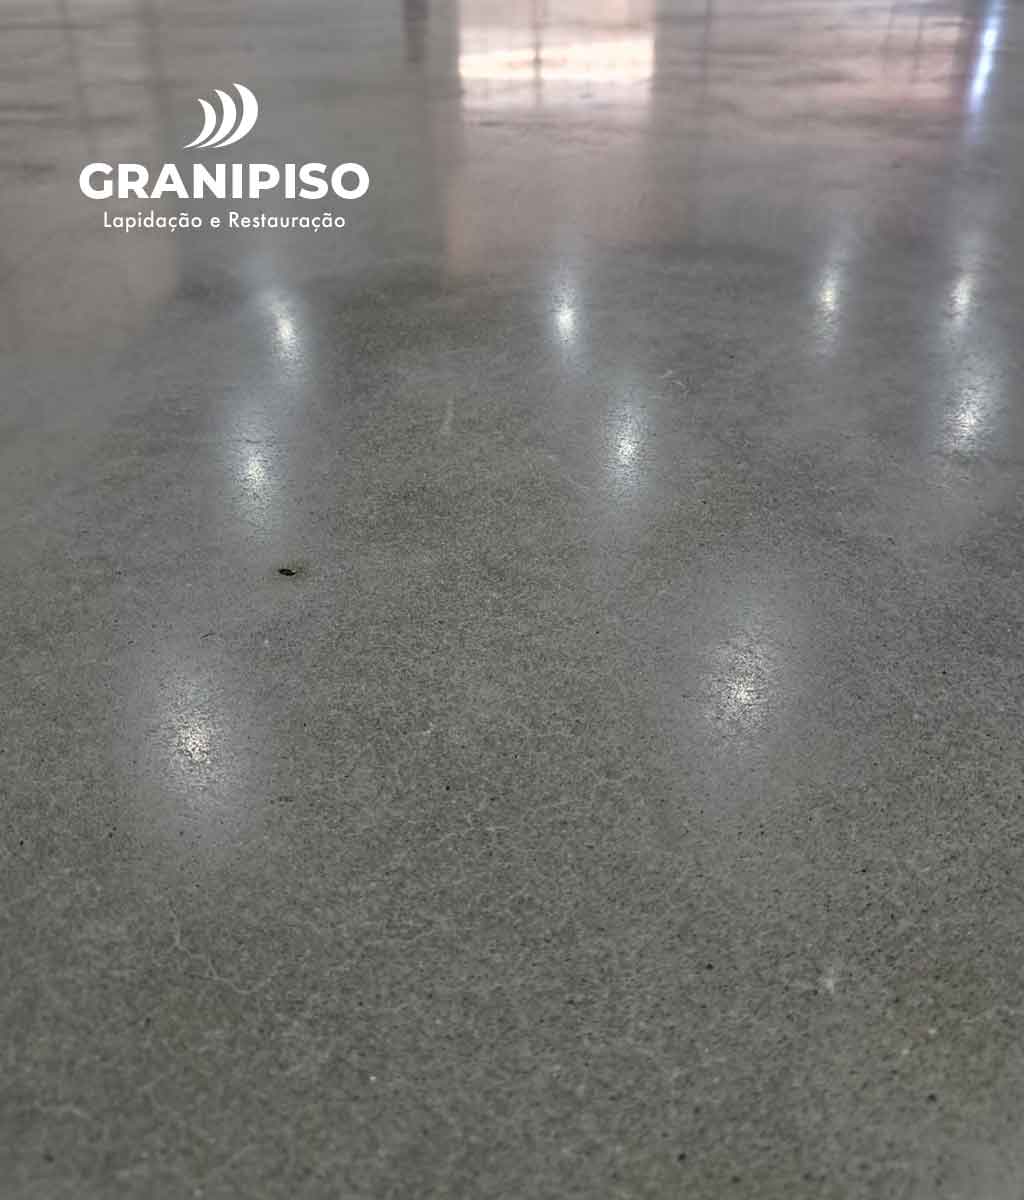 lapidacao-piso-industrial-galpao-granipiso-04